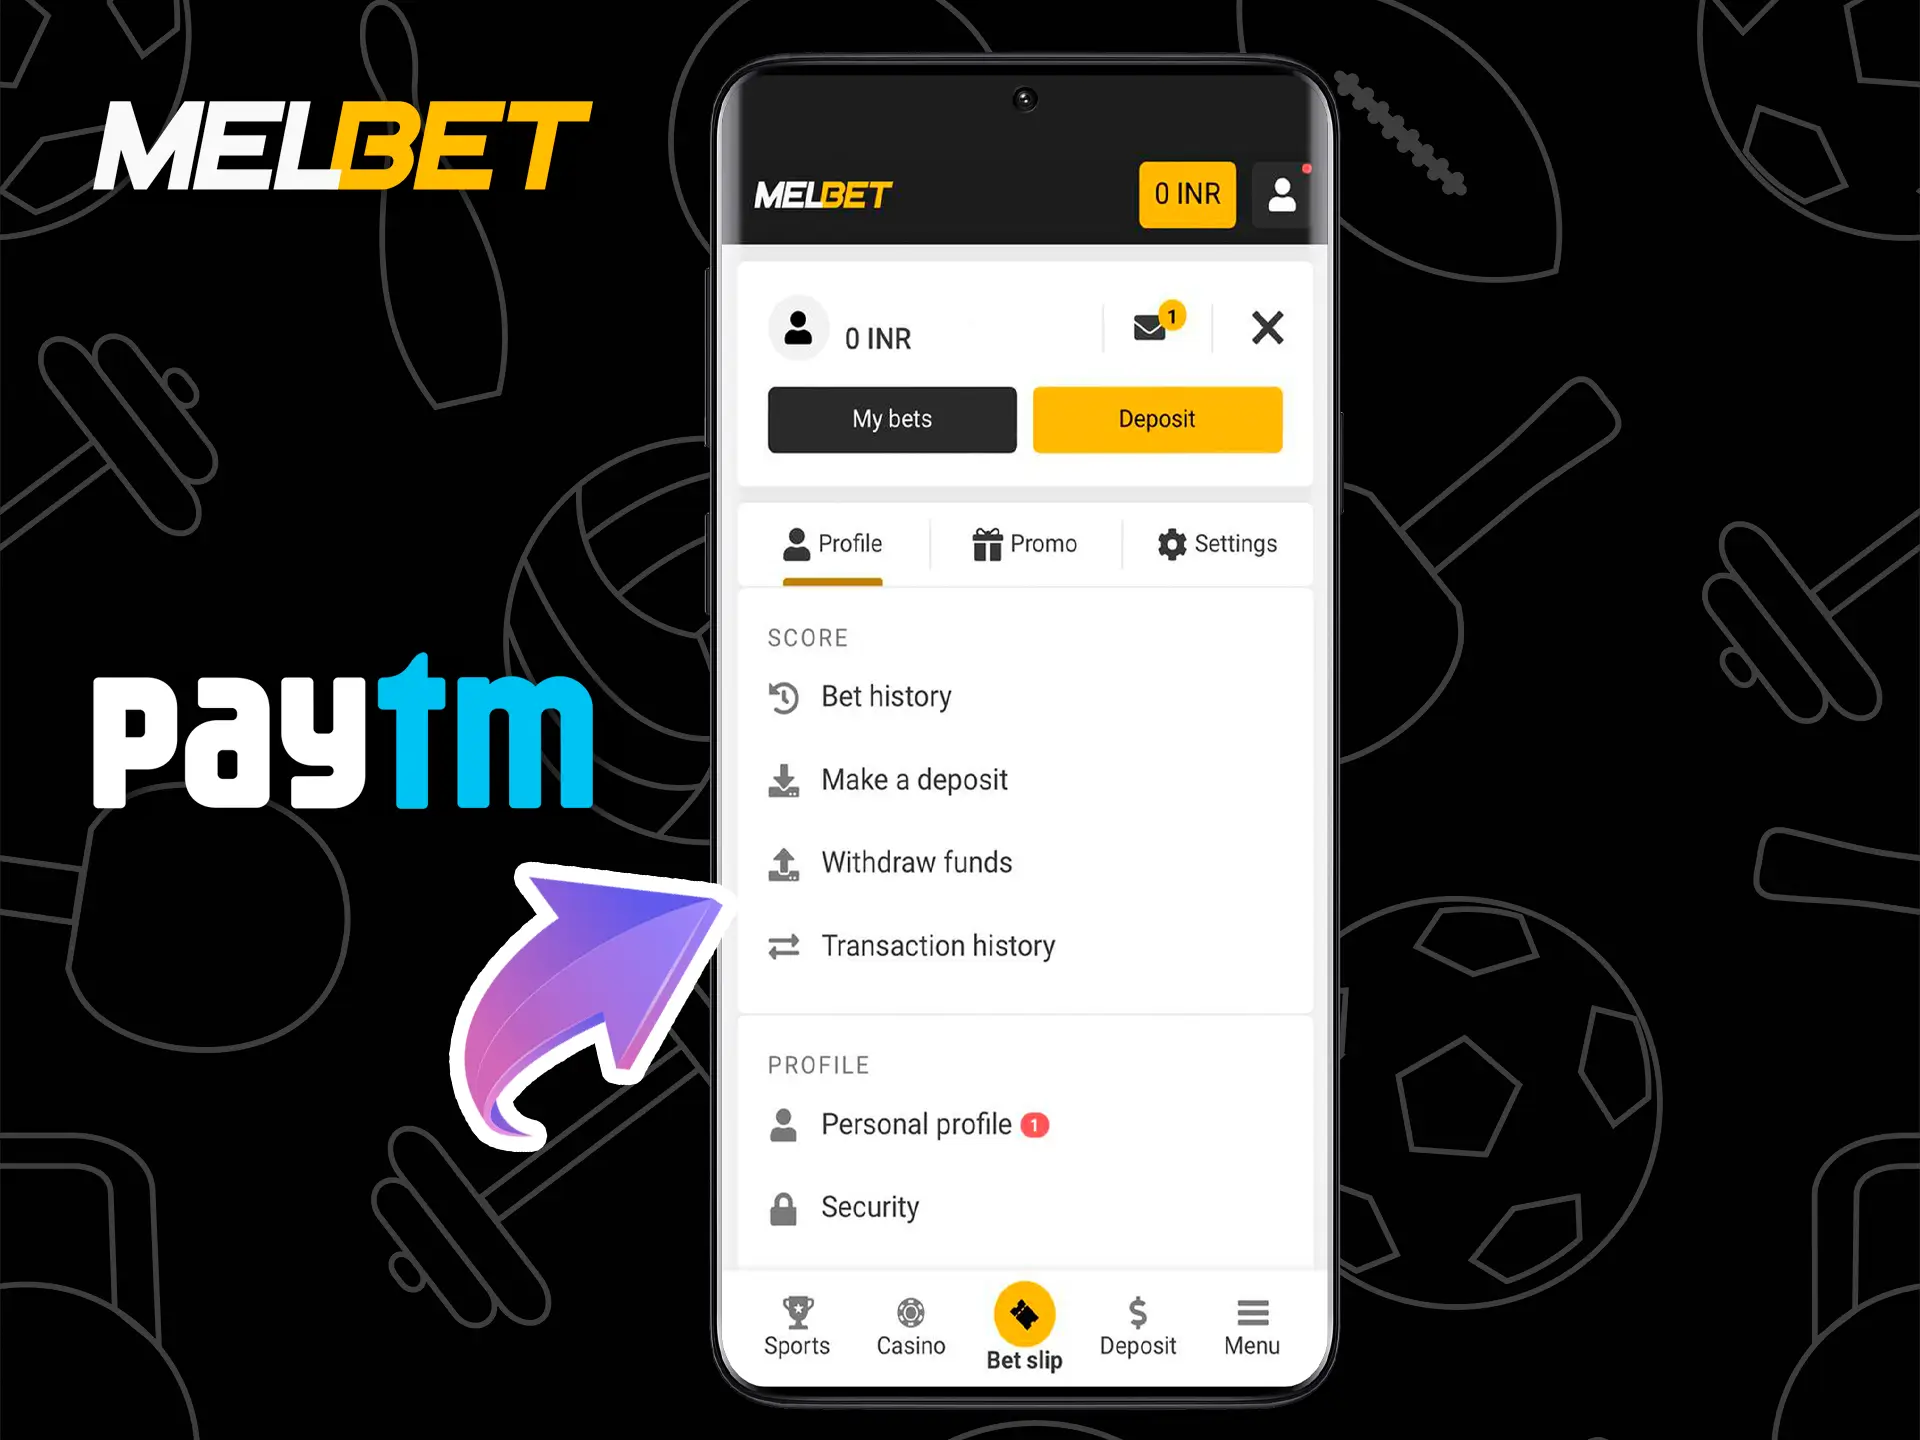 Open the Melbet mobile site.